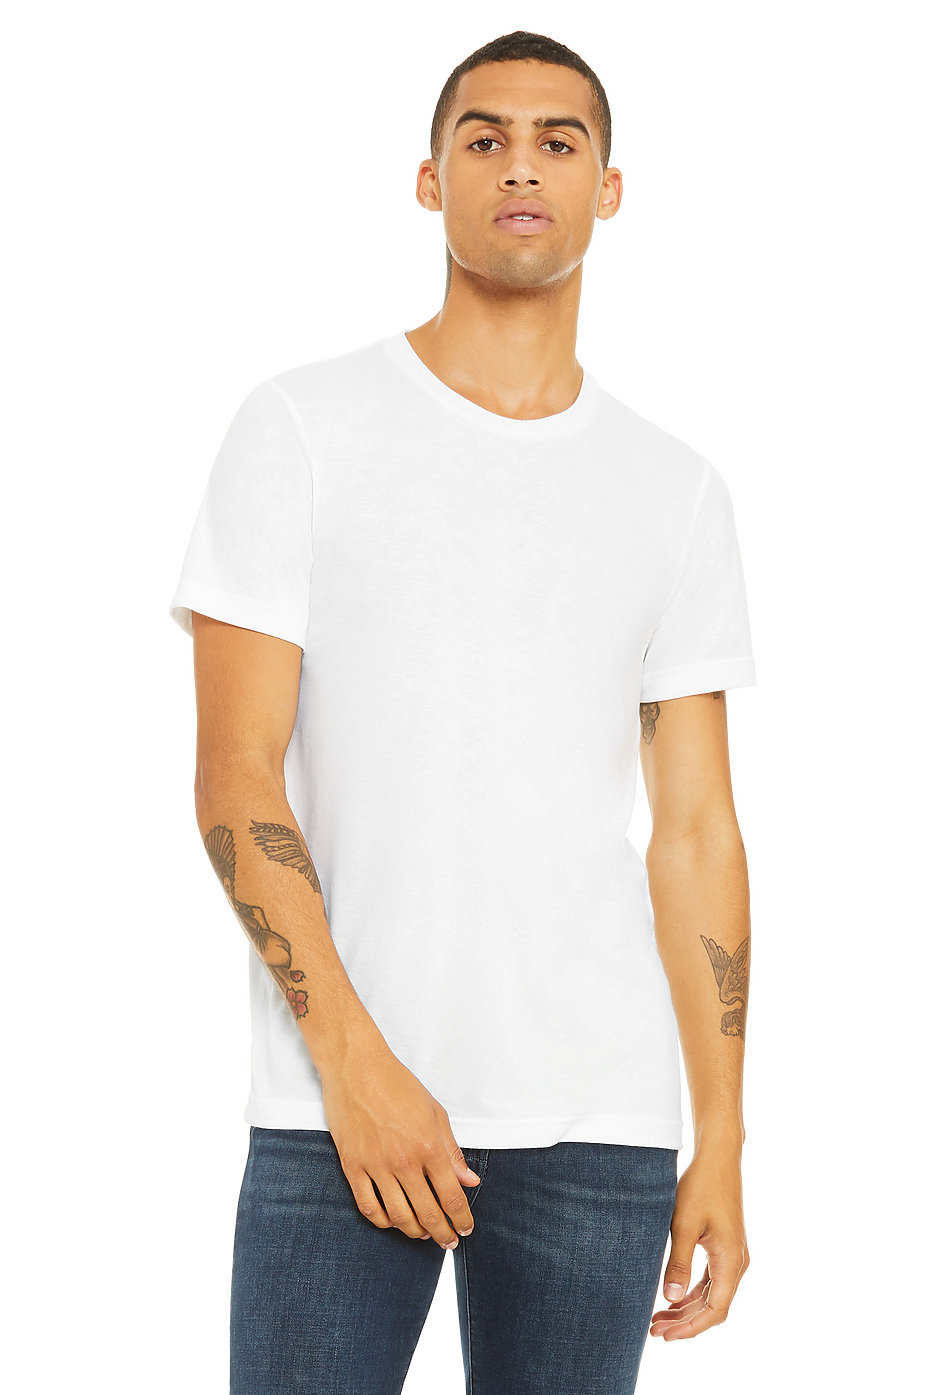 Tri Blend T Shirts Unisex Tri Blend Shirt Mens Wholesale Clothing Bella Canvas